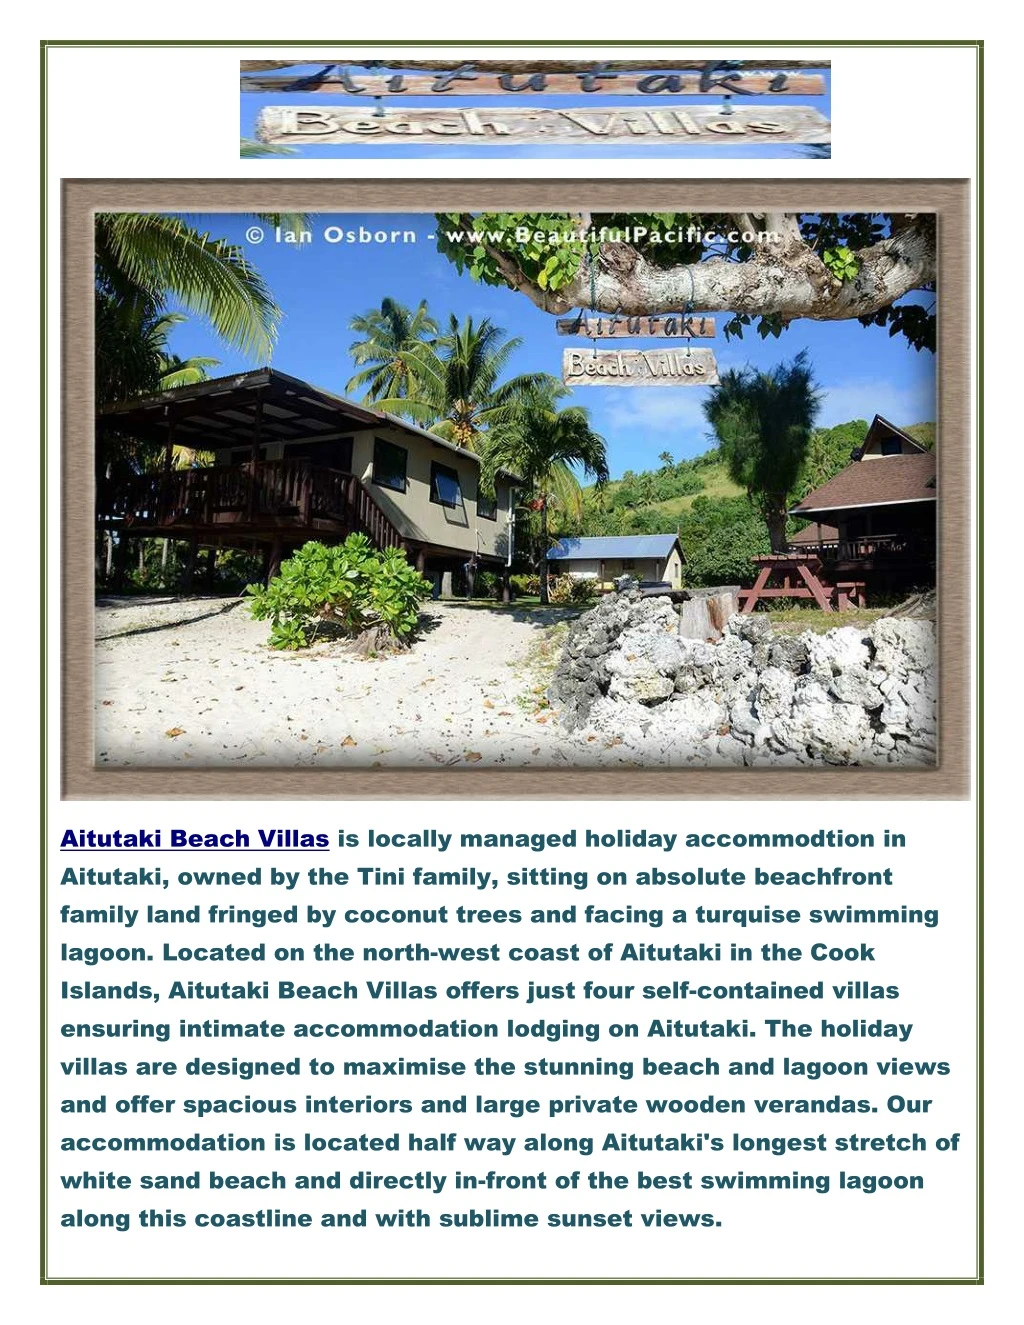 aitutaki beach villas is locally managed holiday